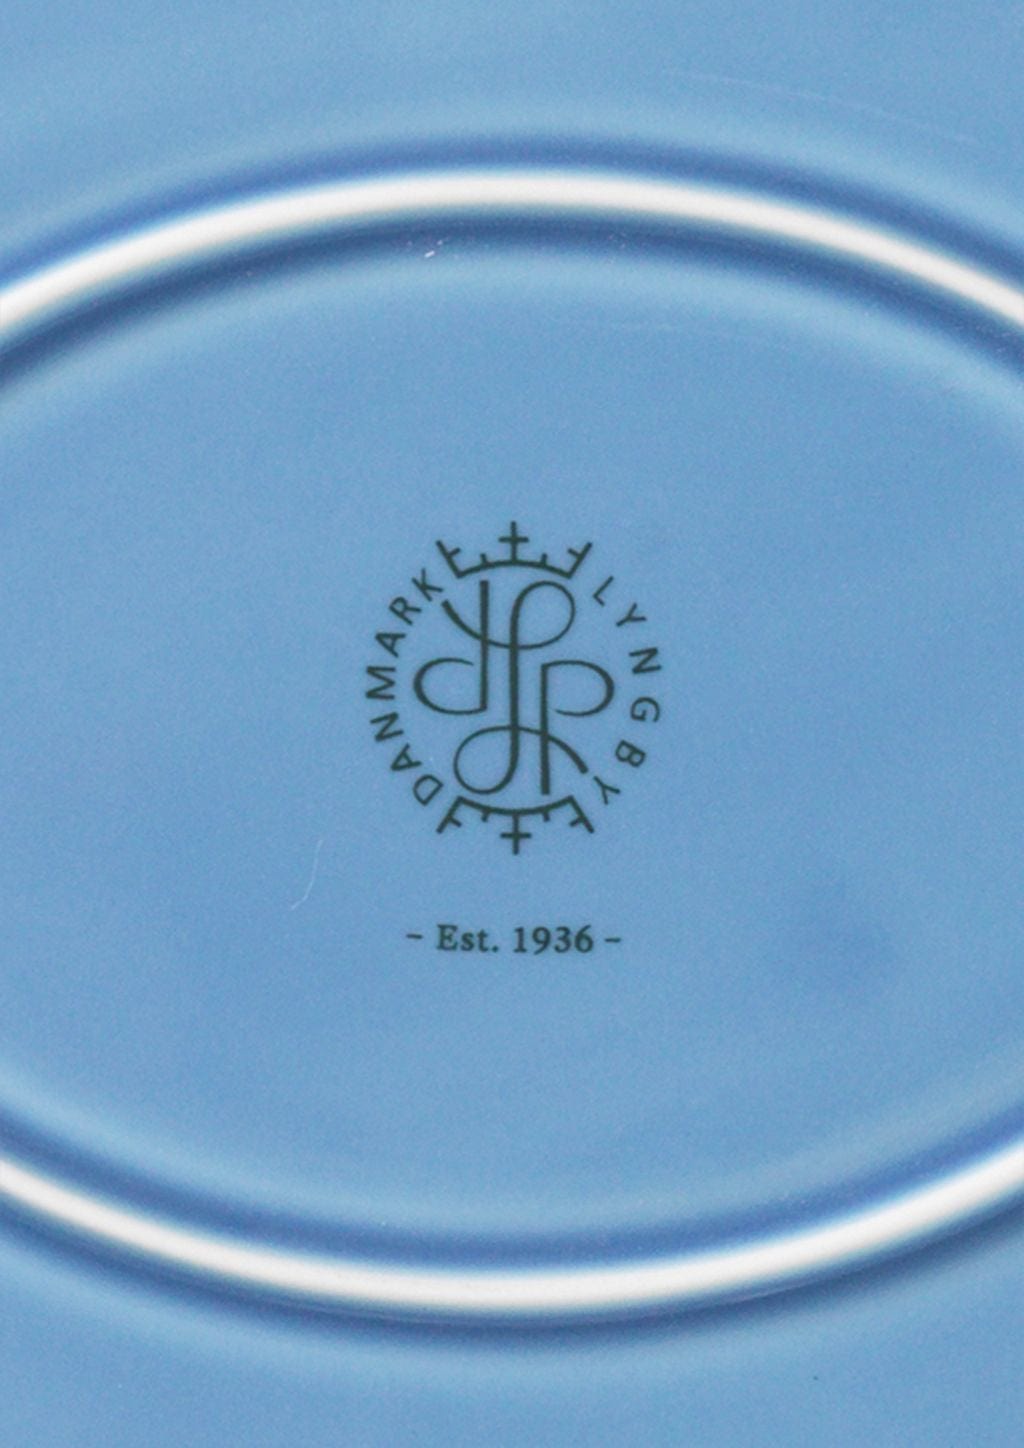 Lyngby Porcelæn Rhombe Color Oval Serving Plate 28,5x21,5, Blue